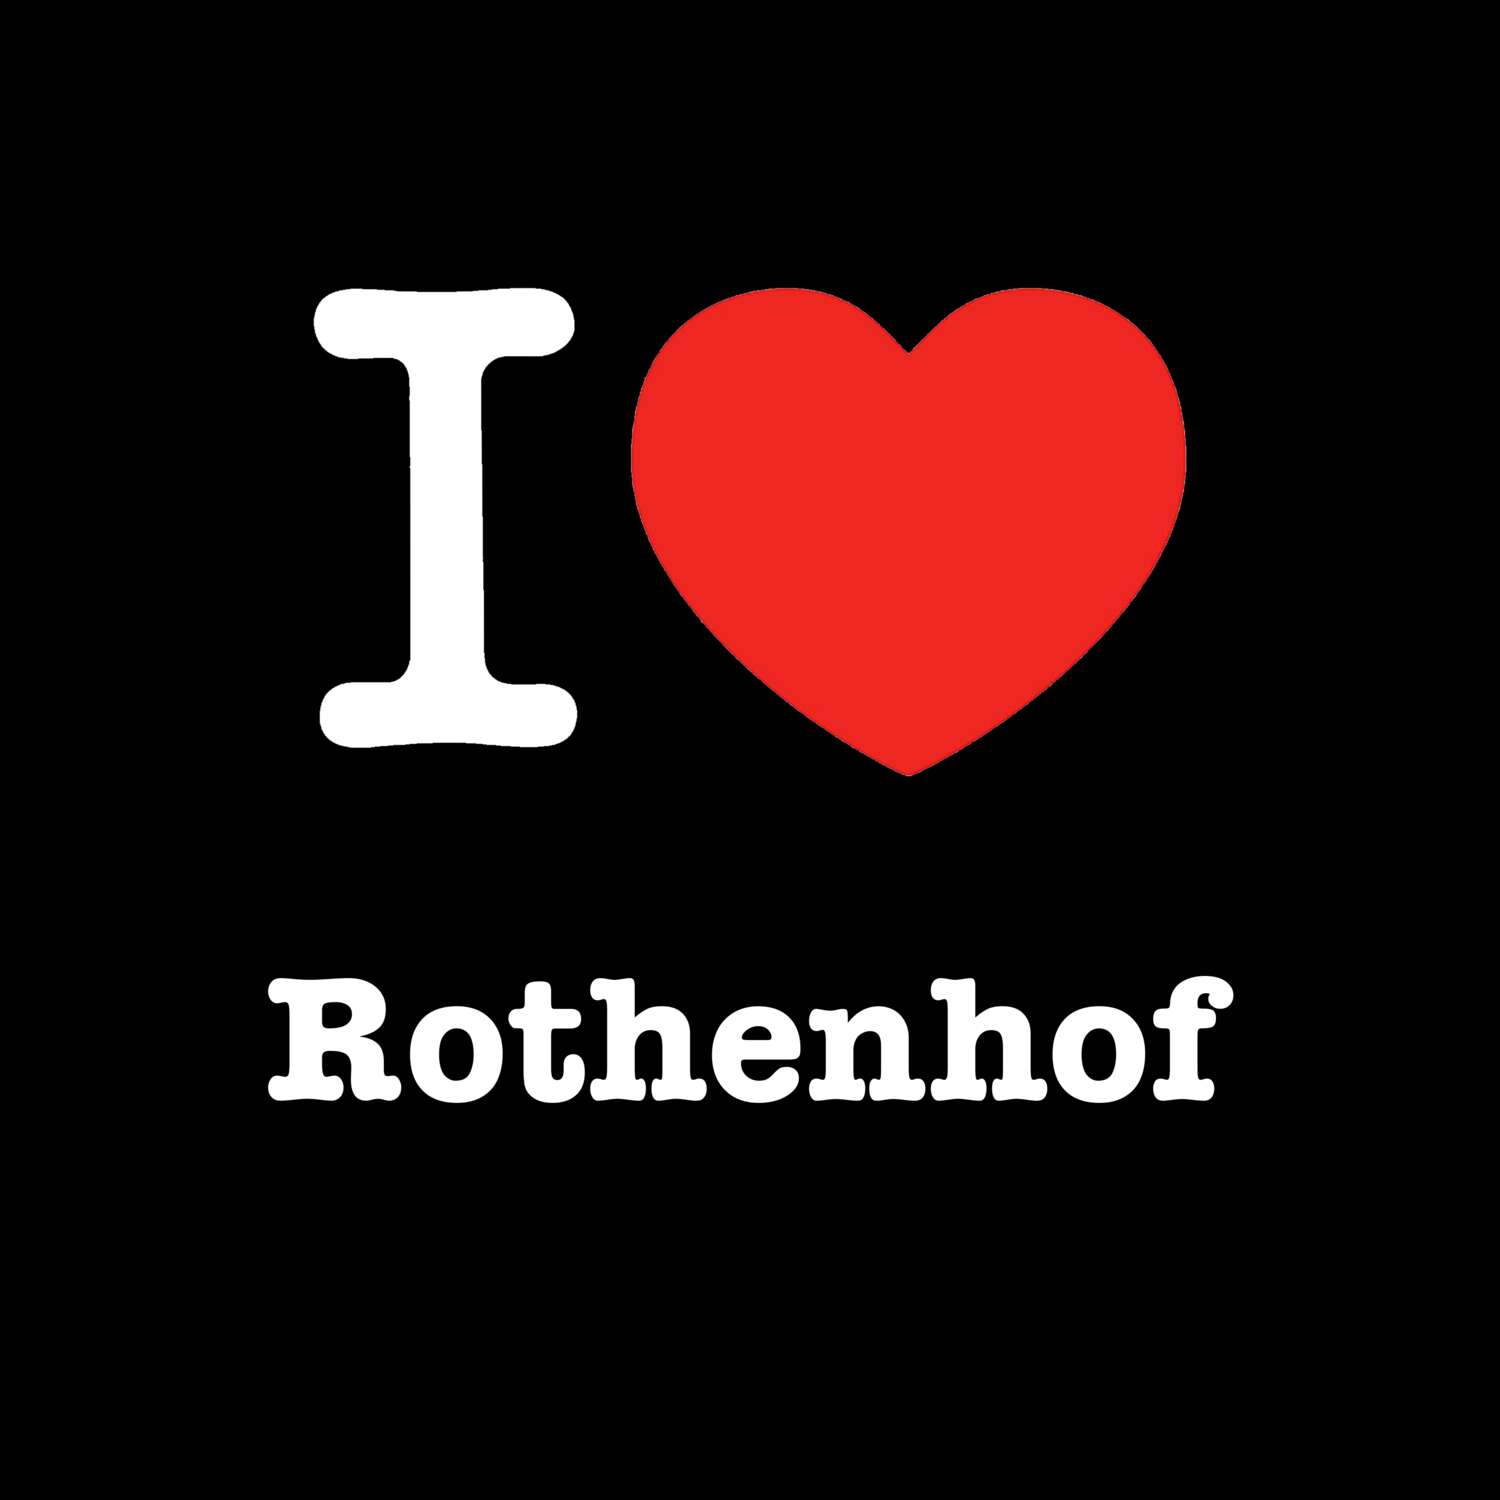 Rothenhof T-Shirt »I love«